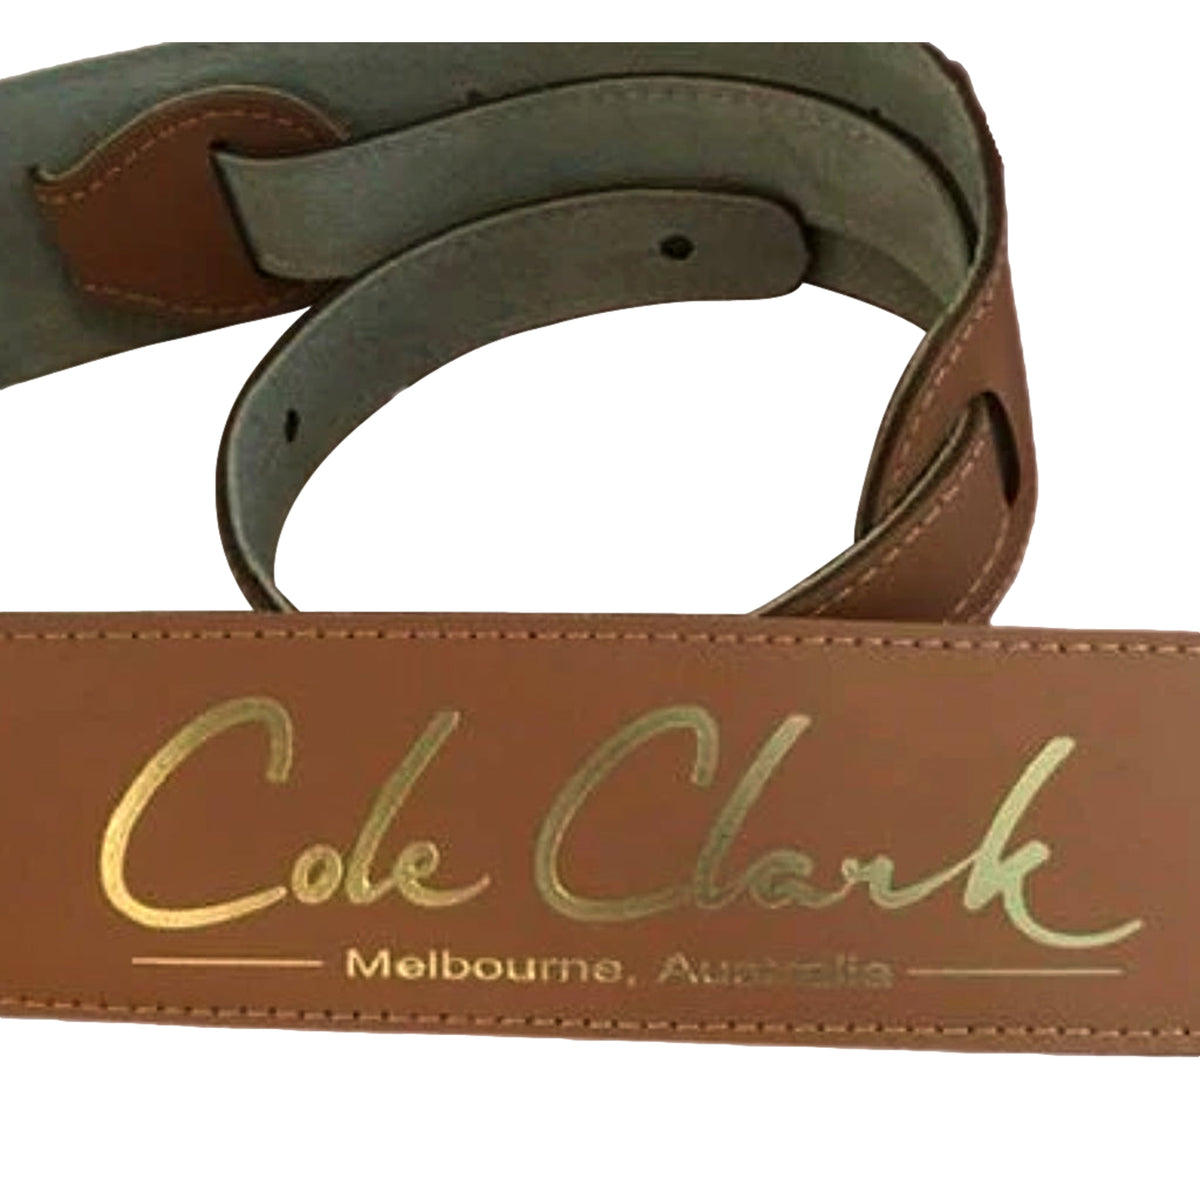 Cole Clark Leather Guitar Strap Tan Gold Logo